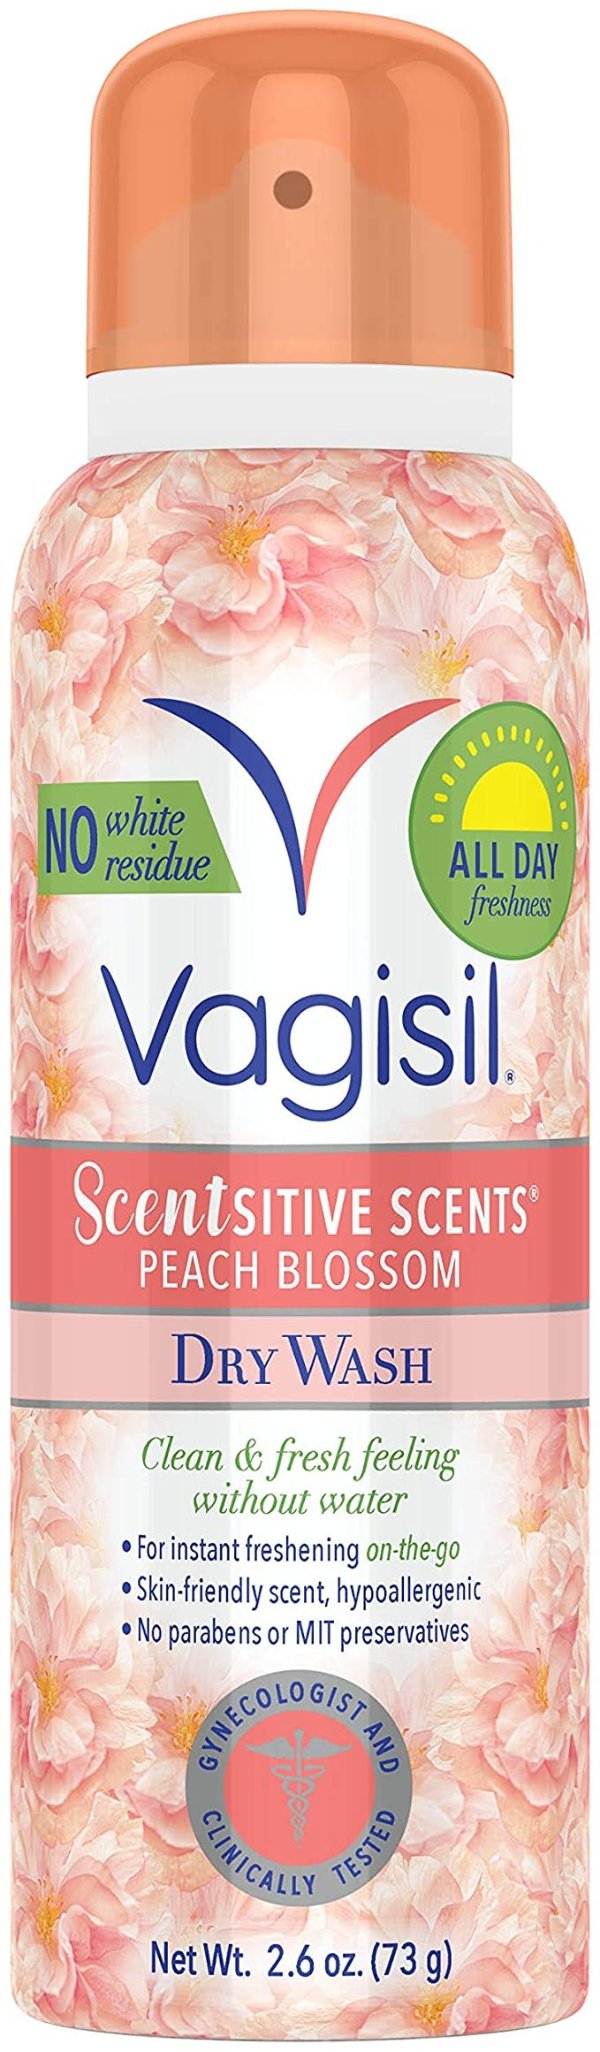 Scentsitive Scents Feminine Dry Wash Deodorant Spray for Women 2.6oz